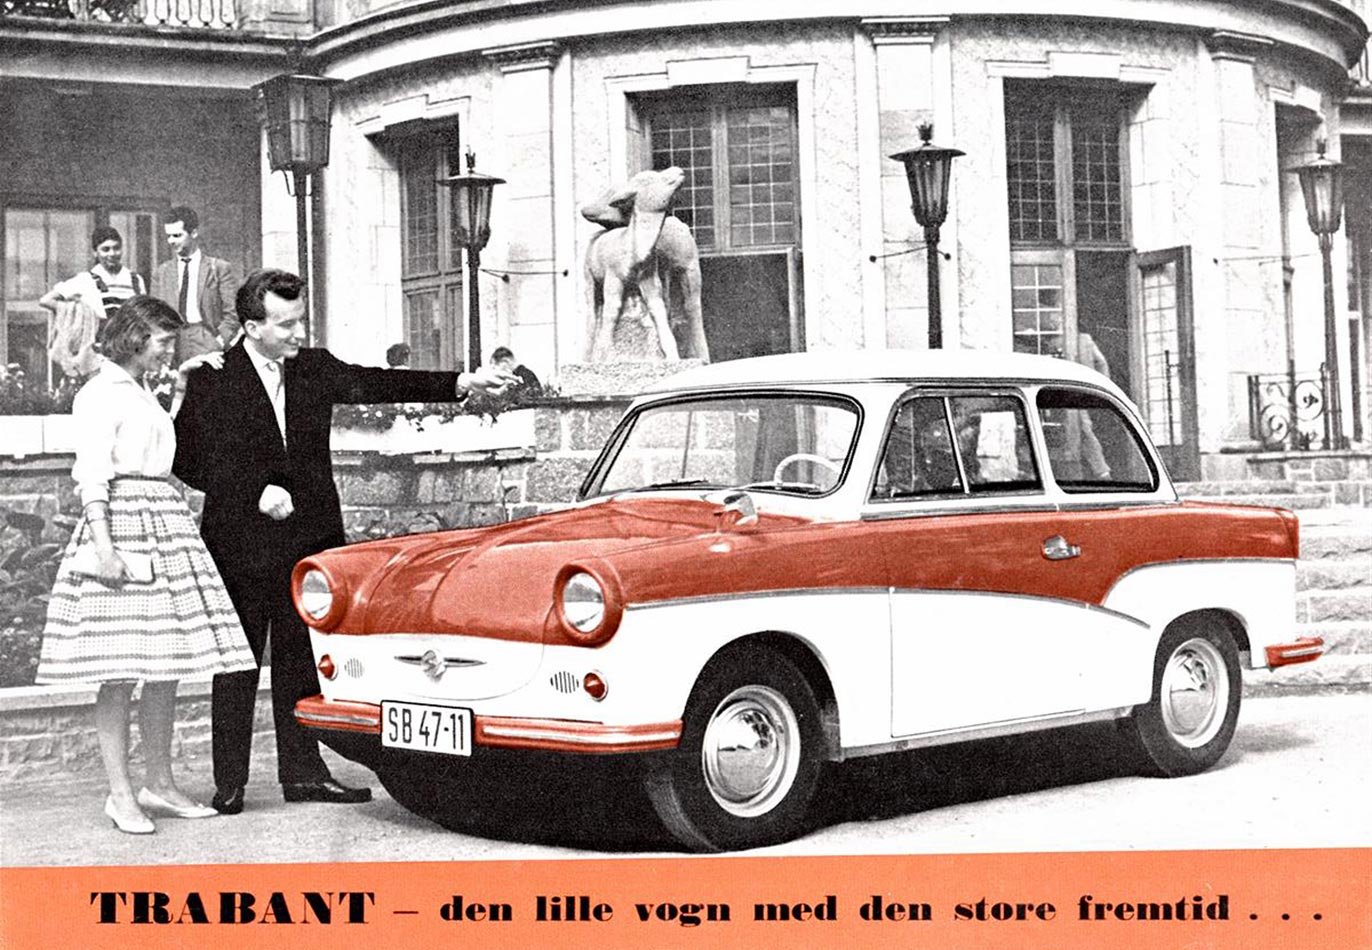 1959 - Trabant